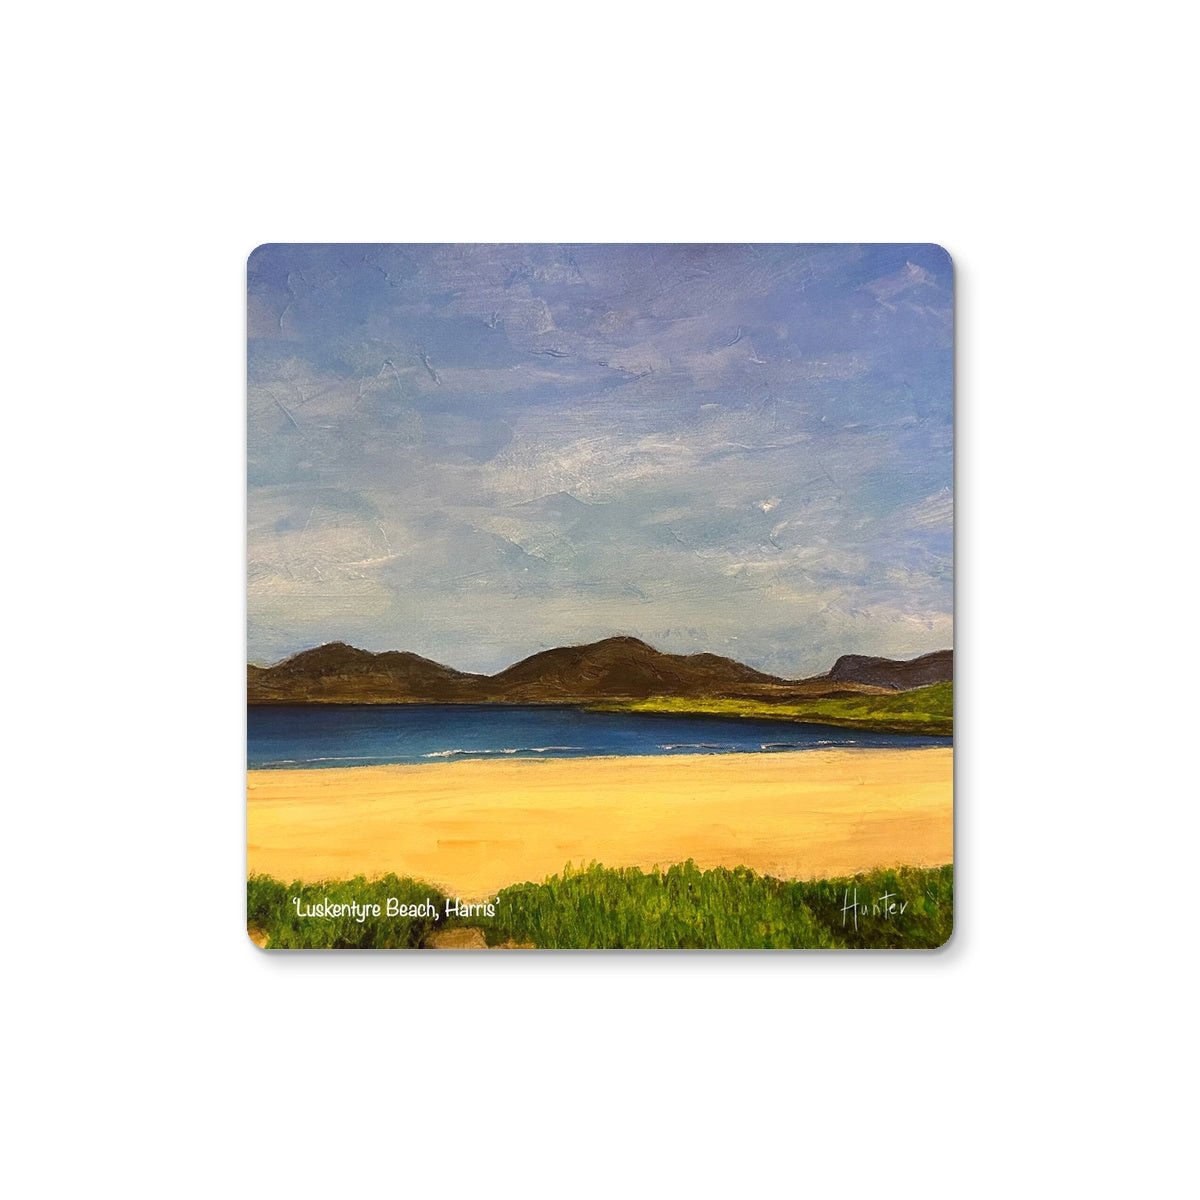 Luskentyre Beach Harris Art Gifts Coaster-Coasters-Hebridean Islands Art Gallery-6 Coasters-Paintings, Prints, Homeware, Art Gifts From Scotland By Scottish Artist Kevin Hunter